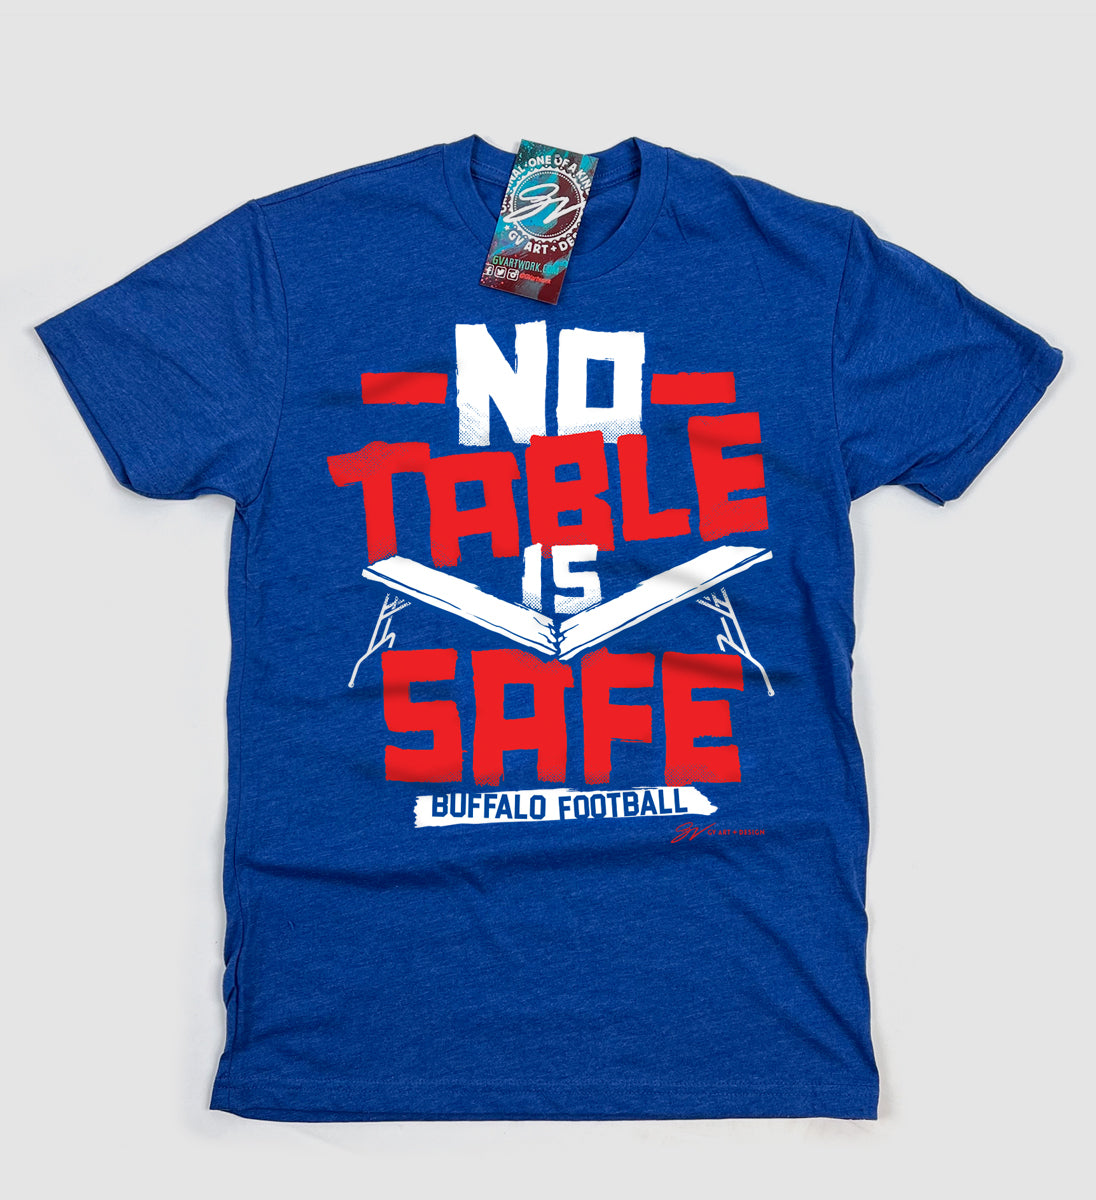 No Table Is Safe Buffalo Football T shirt